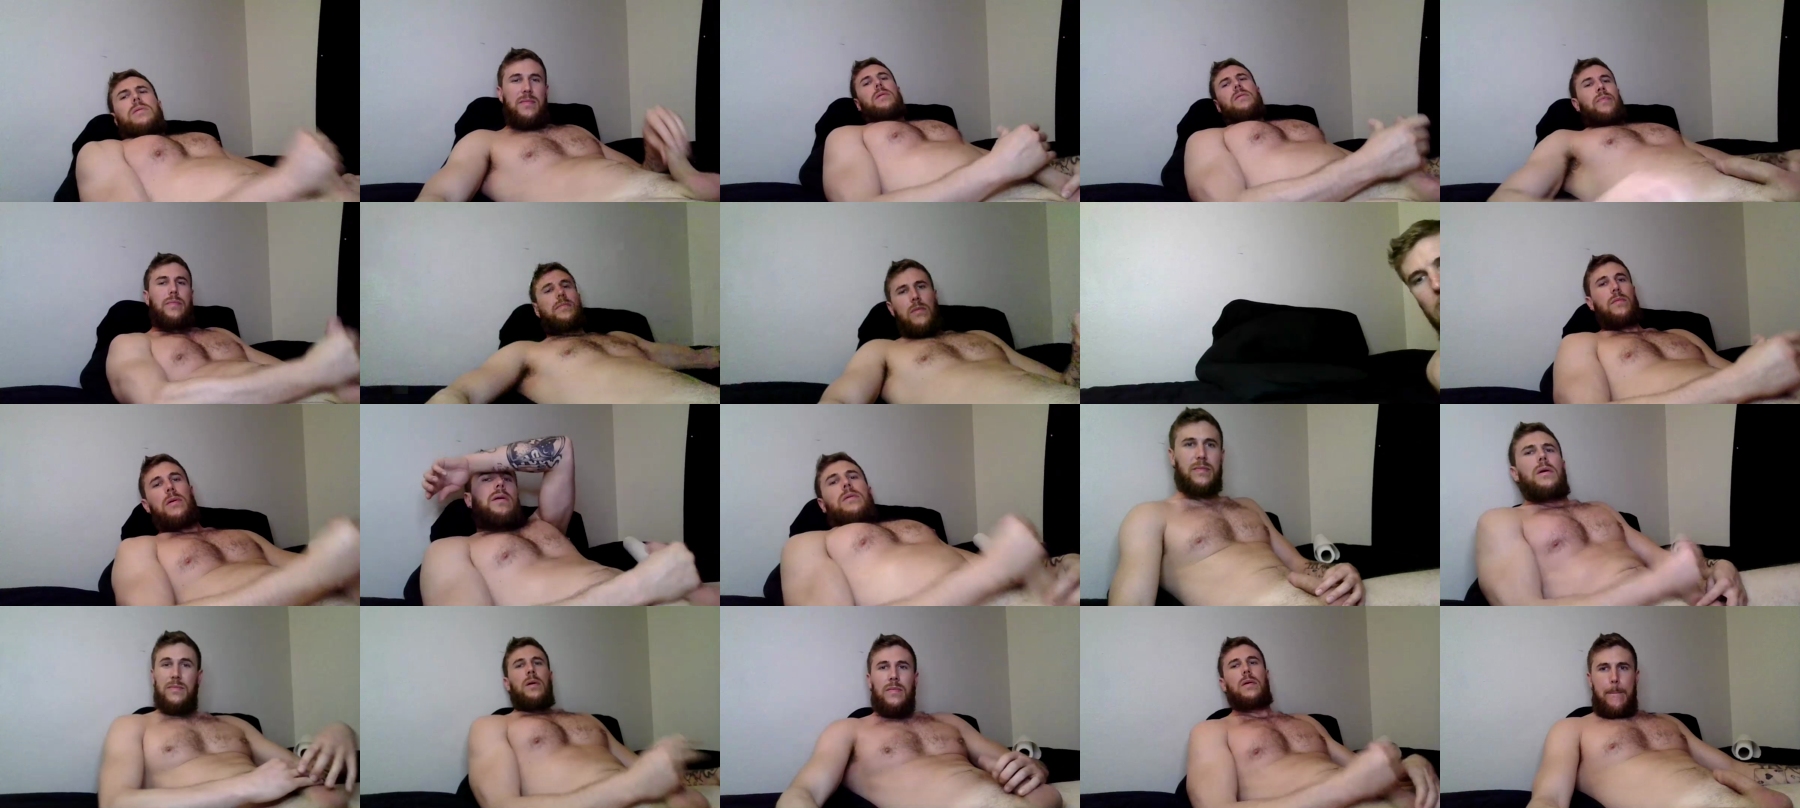 Mac_Drew  27-07-2021 Male Webcam